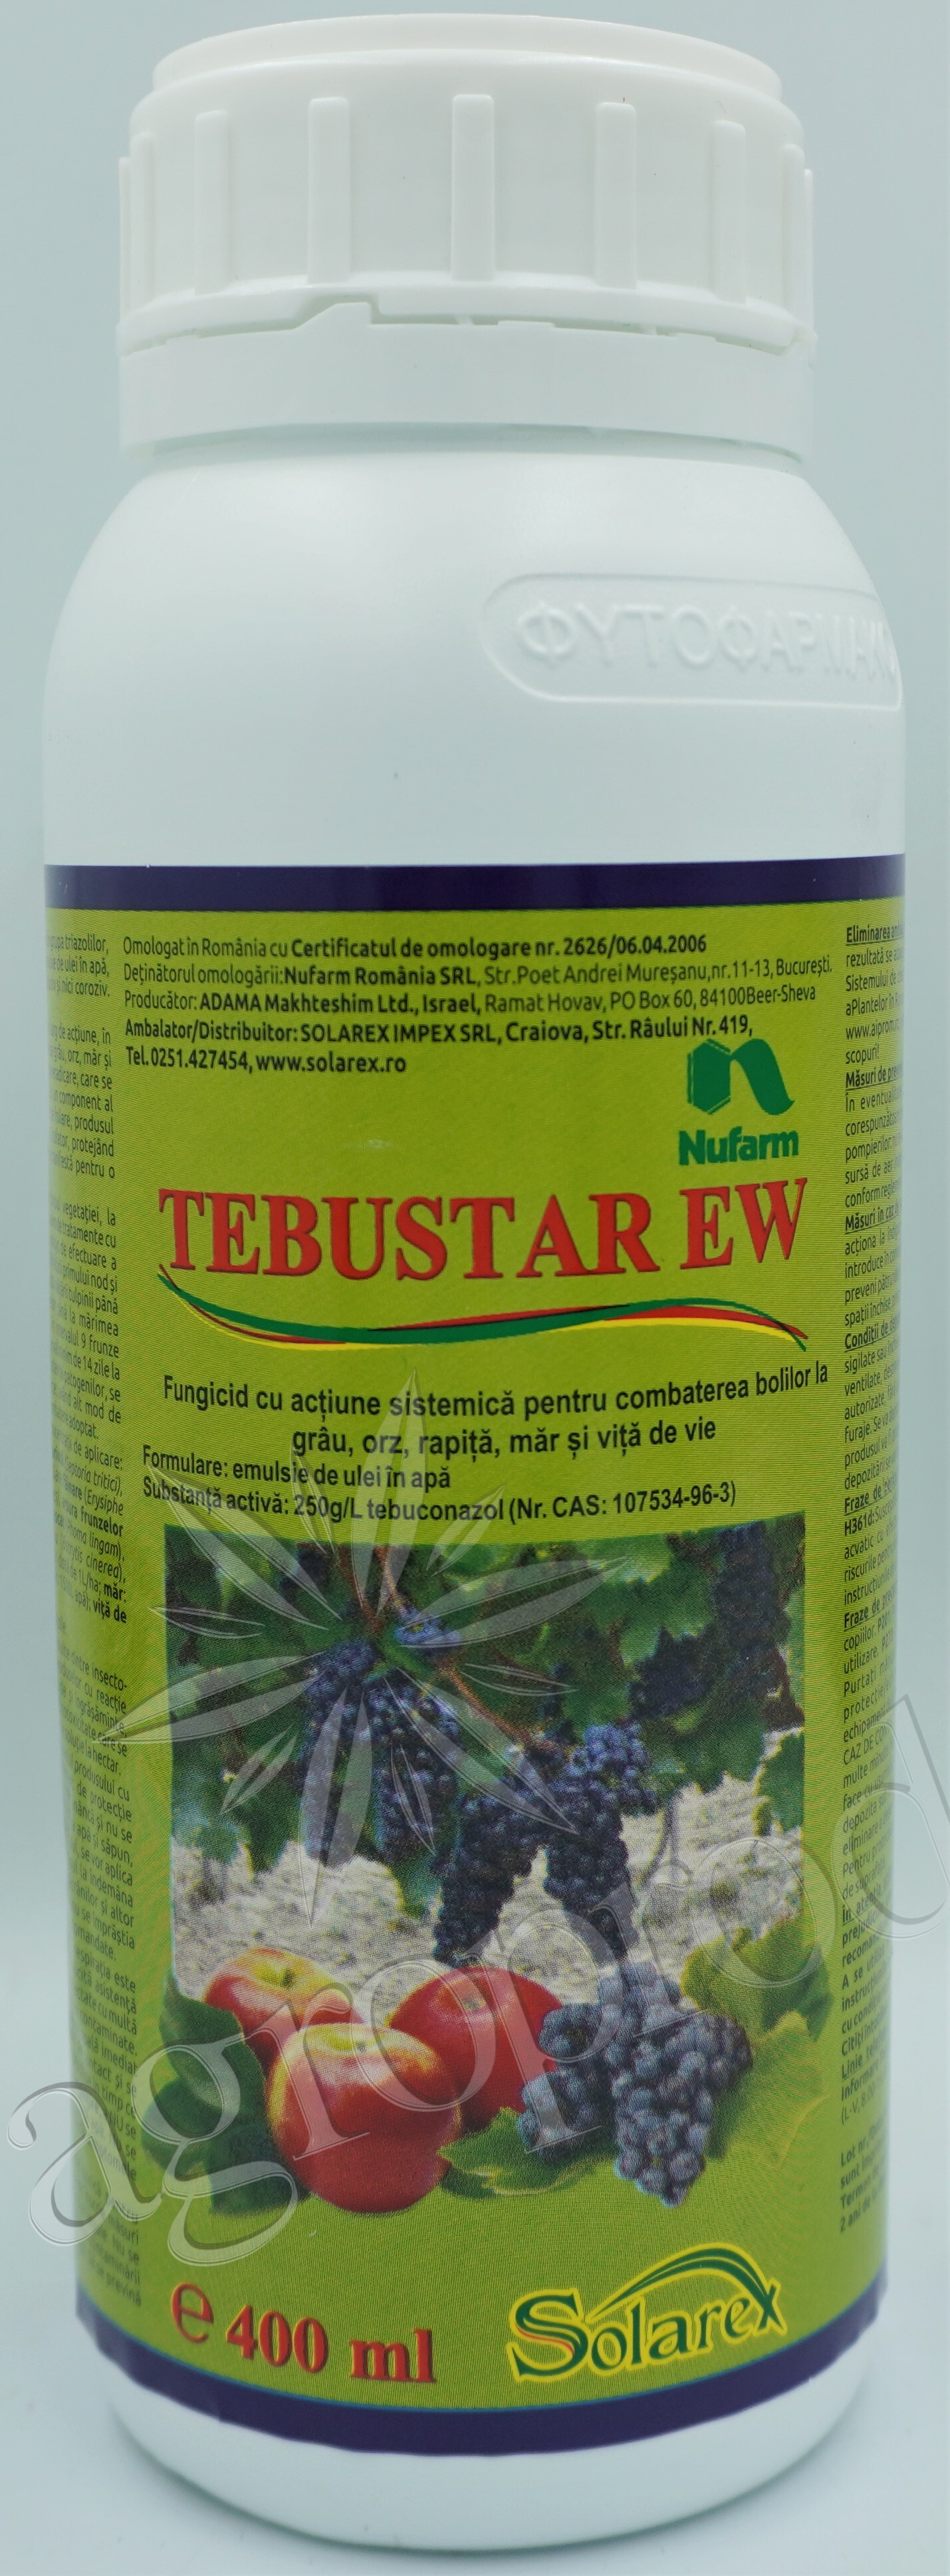 Tebustar EW 400ml - tebuconazol 250g/l